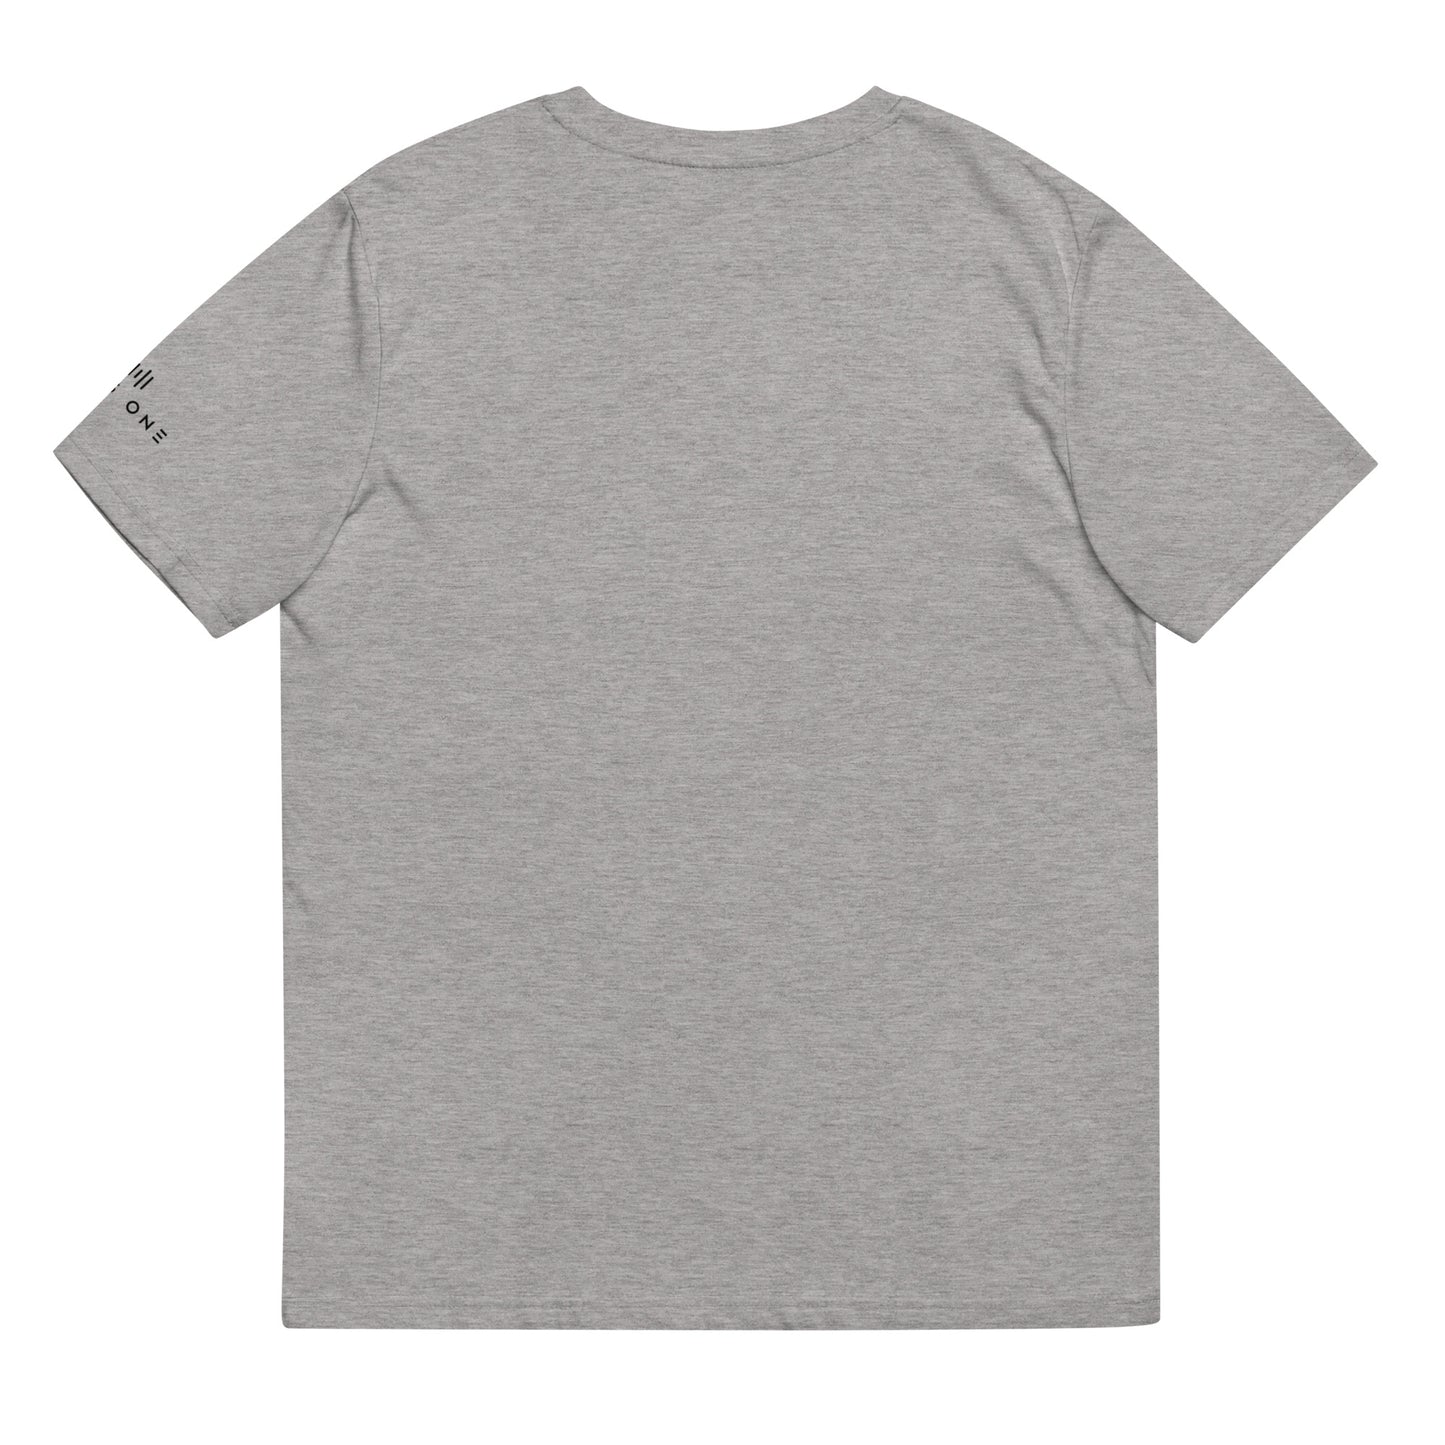 NFTM (v4) Unisex organic cotton t-shirt (Black Text)